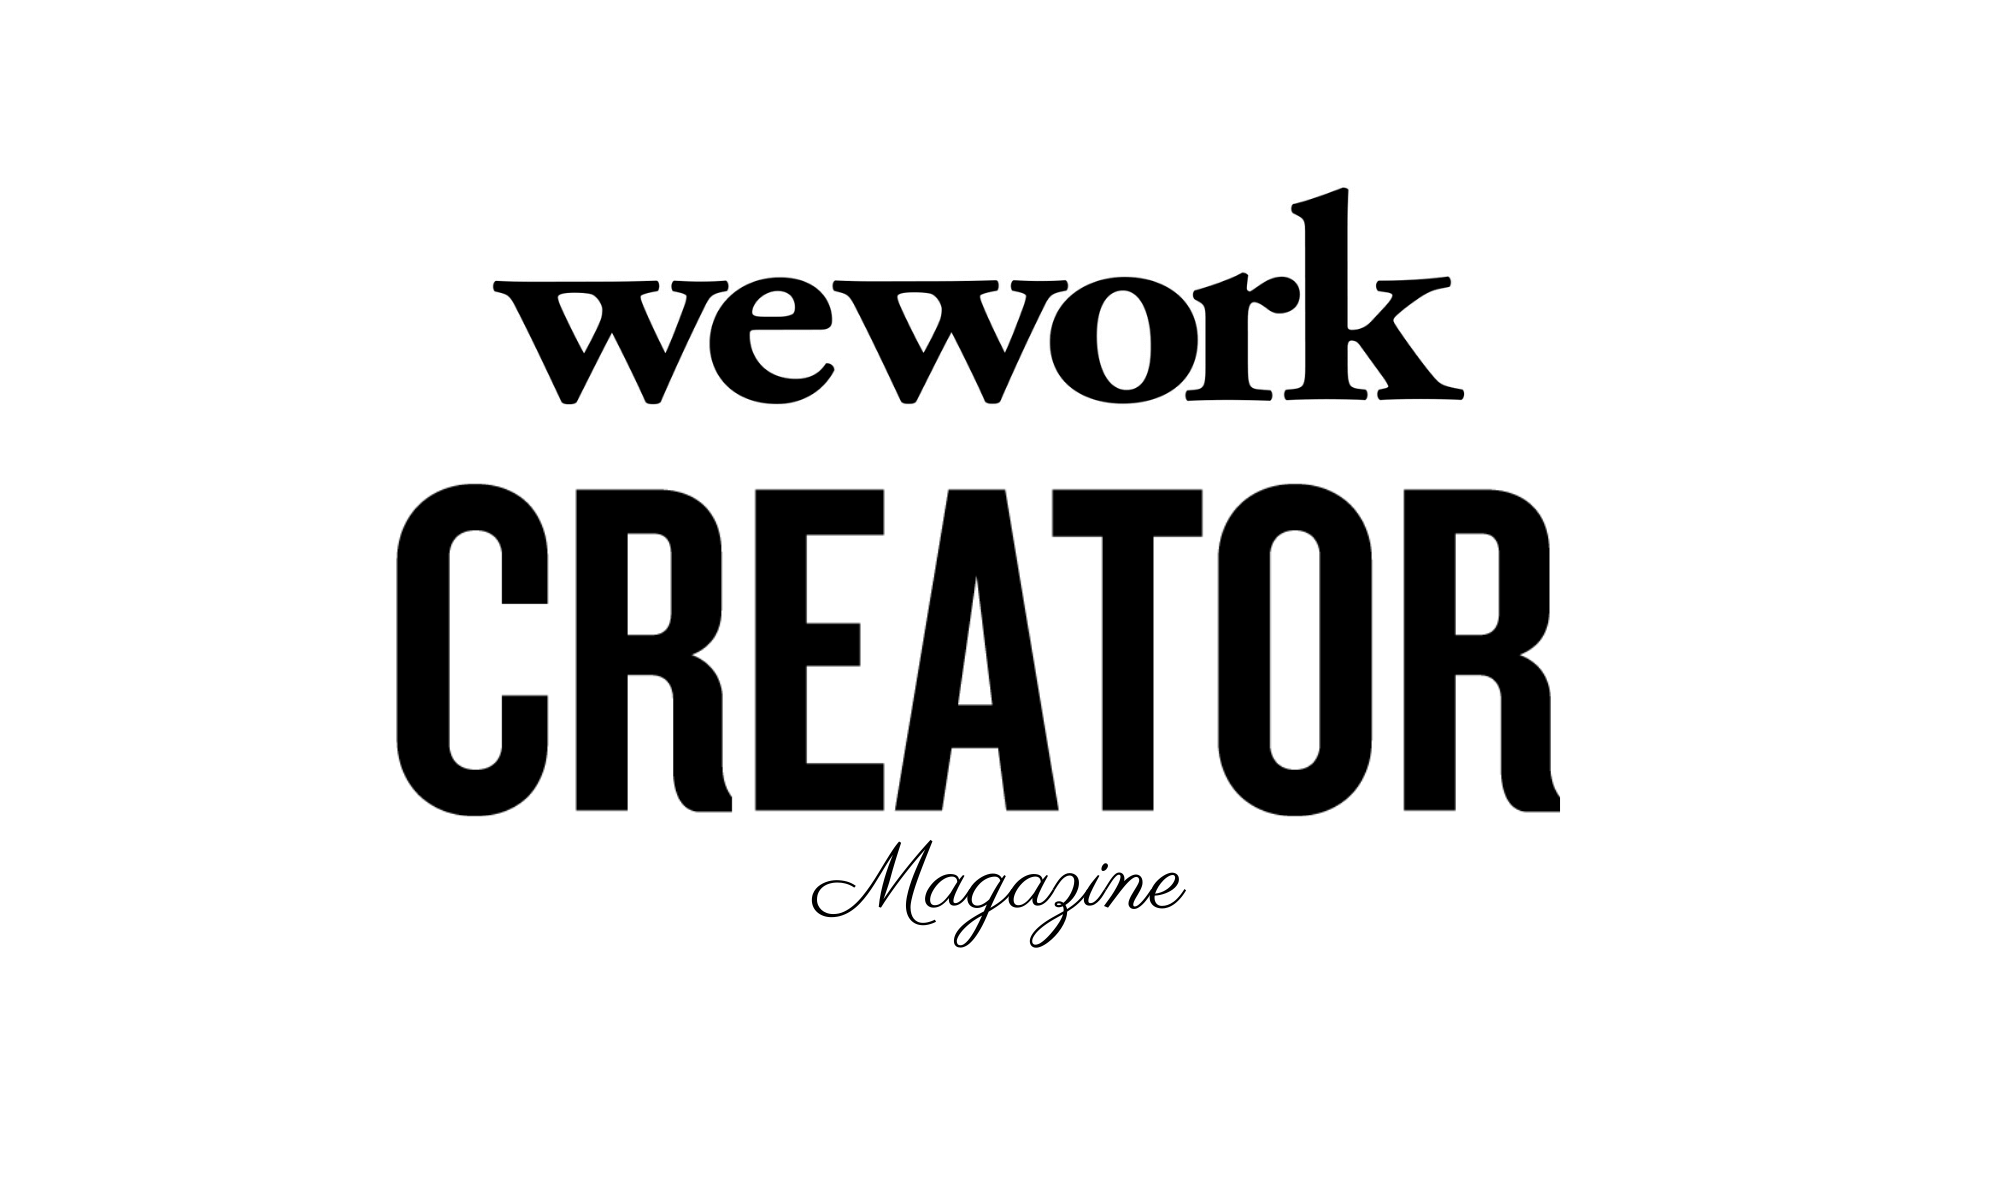 WeWork Creator Magazine